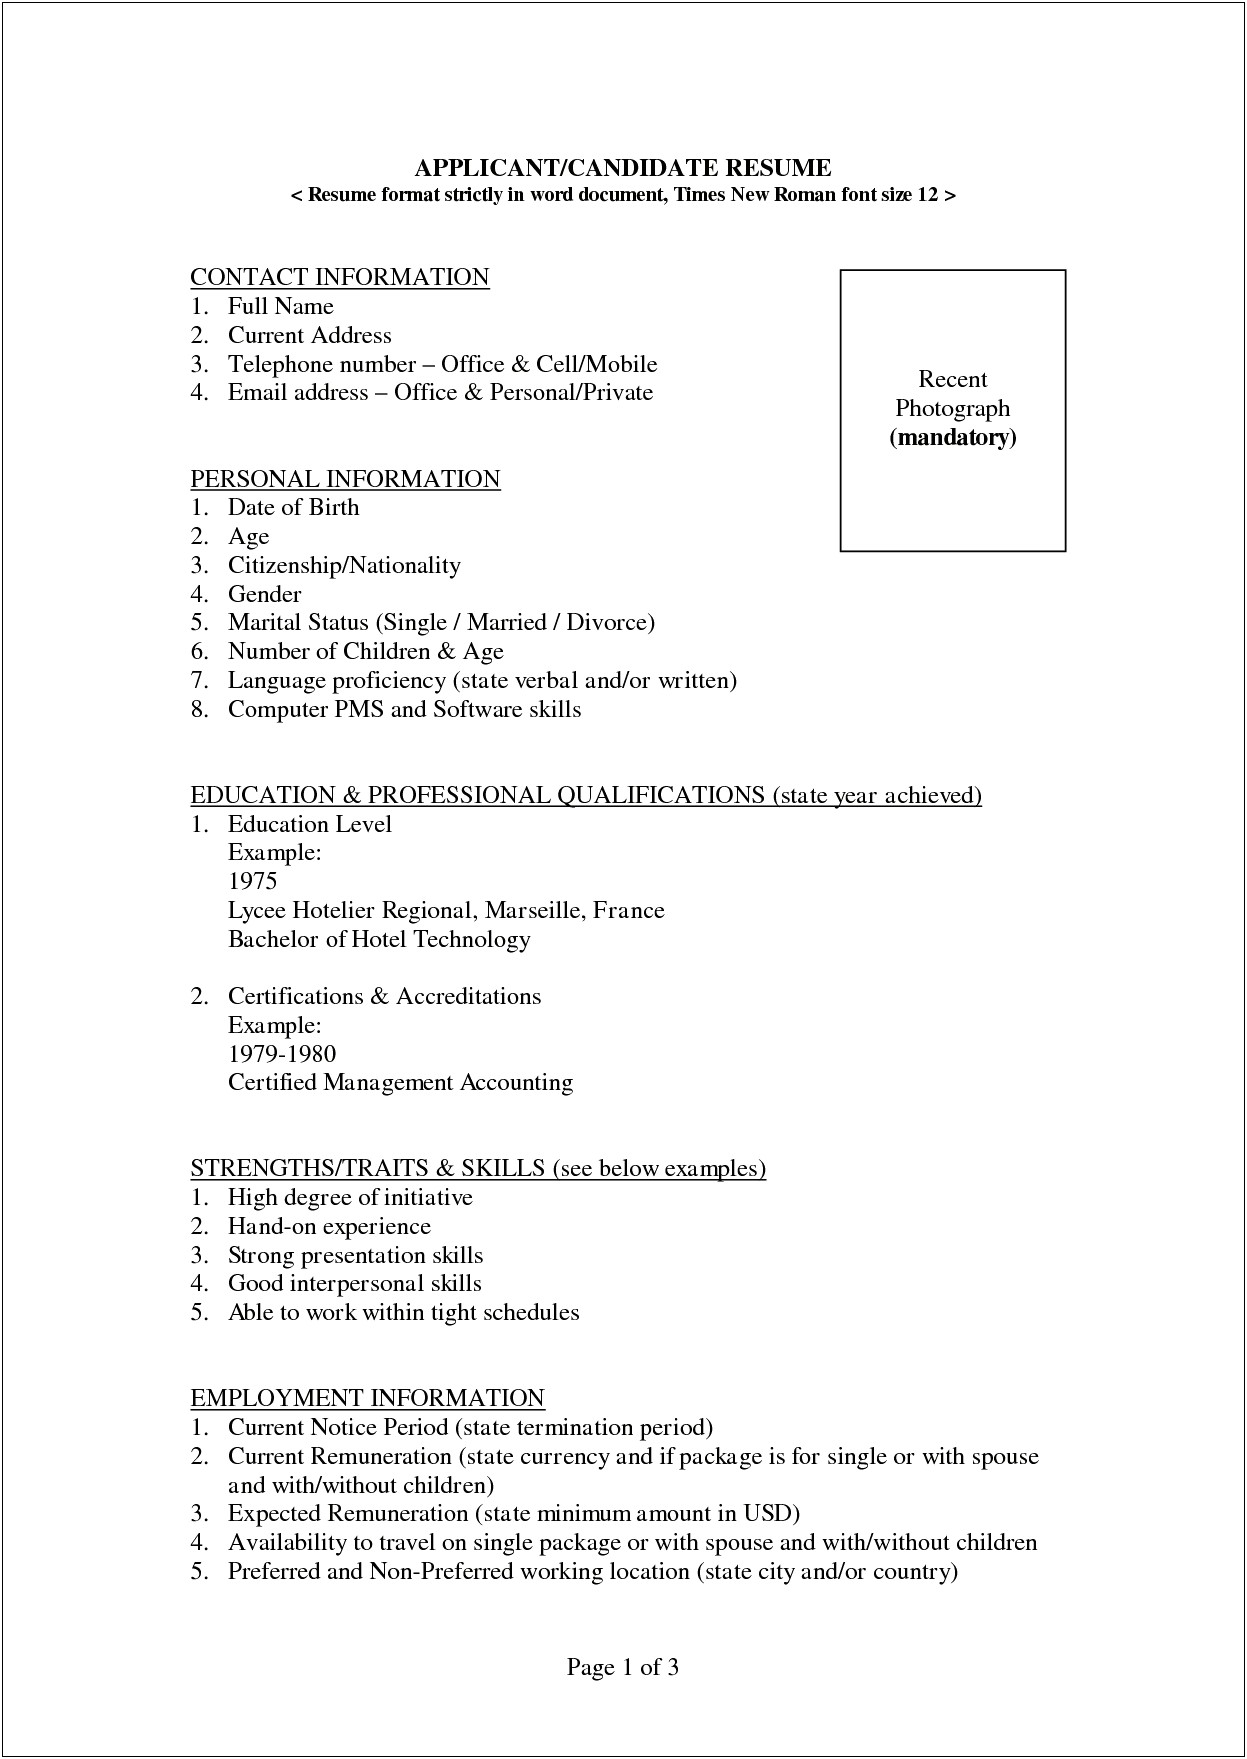 Resume Format For Hotel Job Pdf